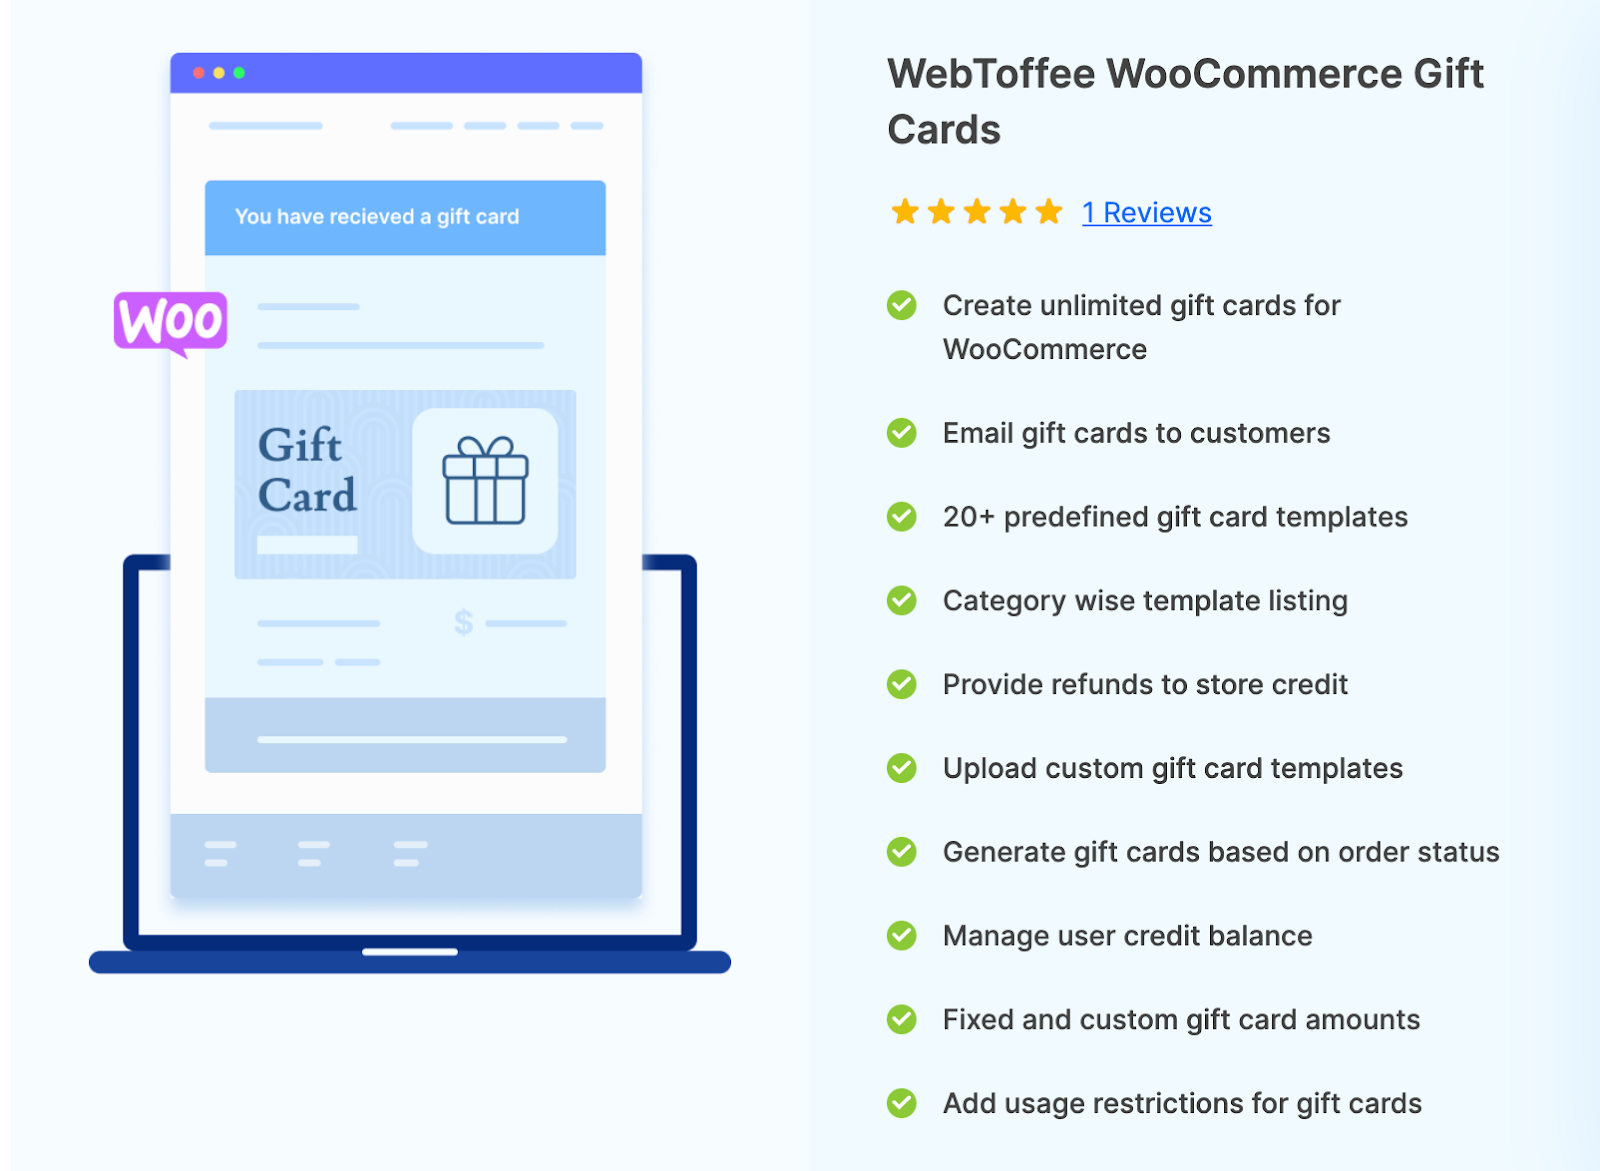 1. WebToffee WooCommerce Gift Cards